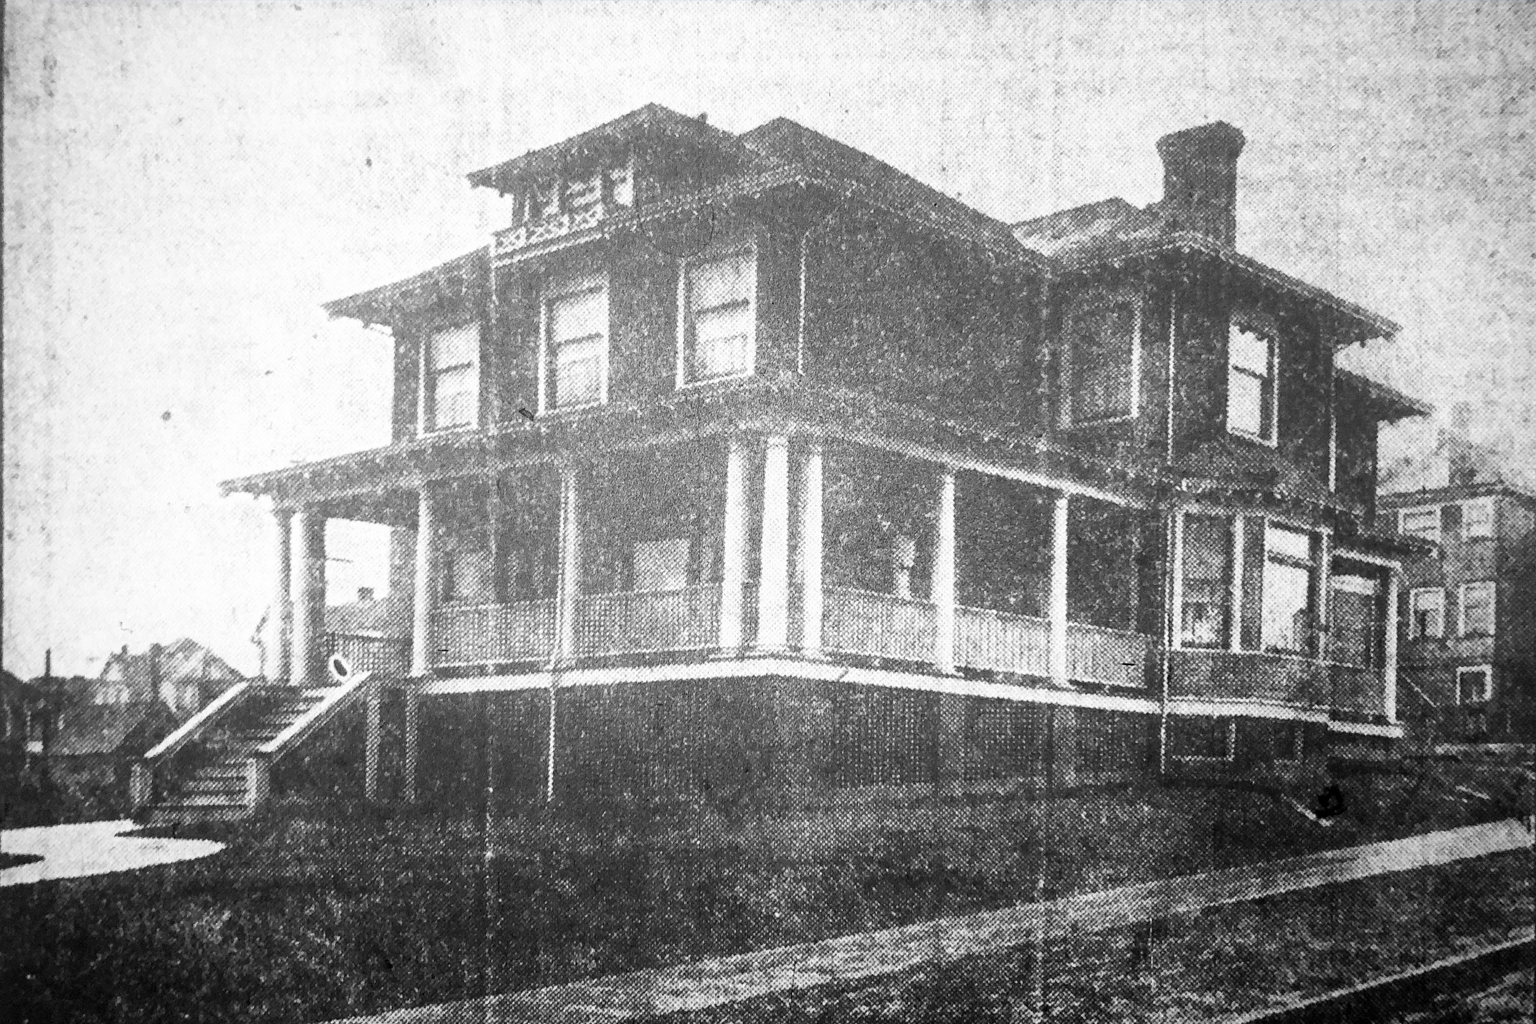 The Tozer House circa 1907